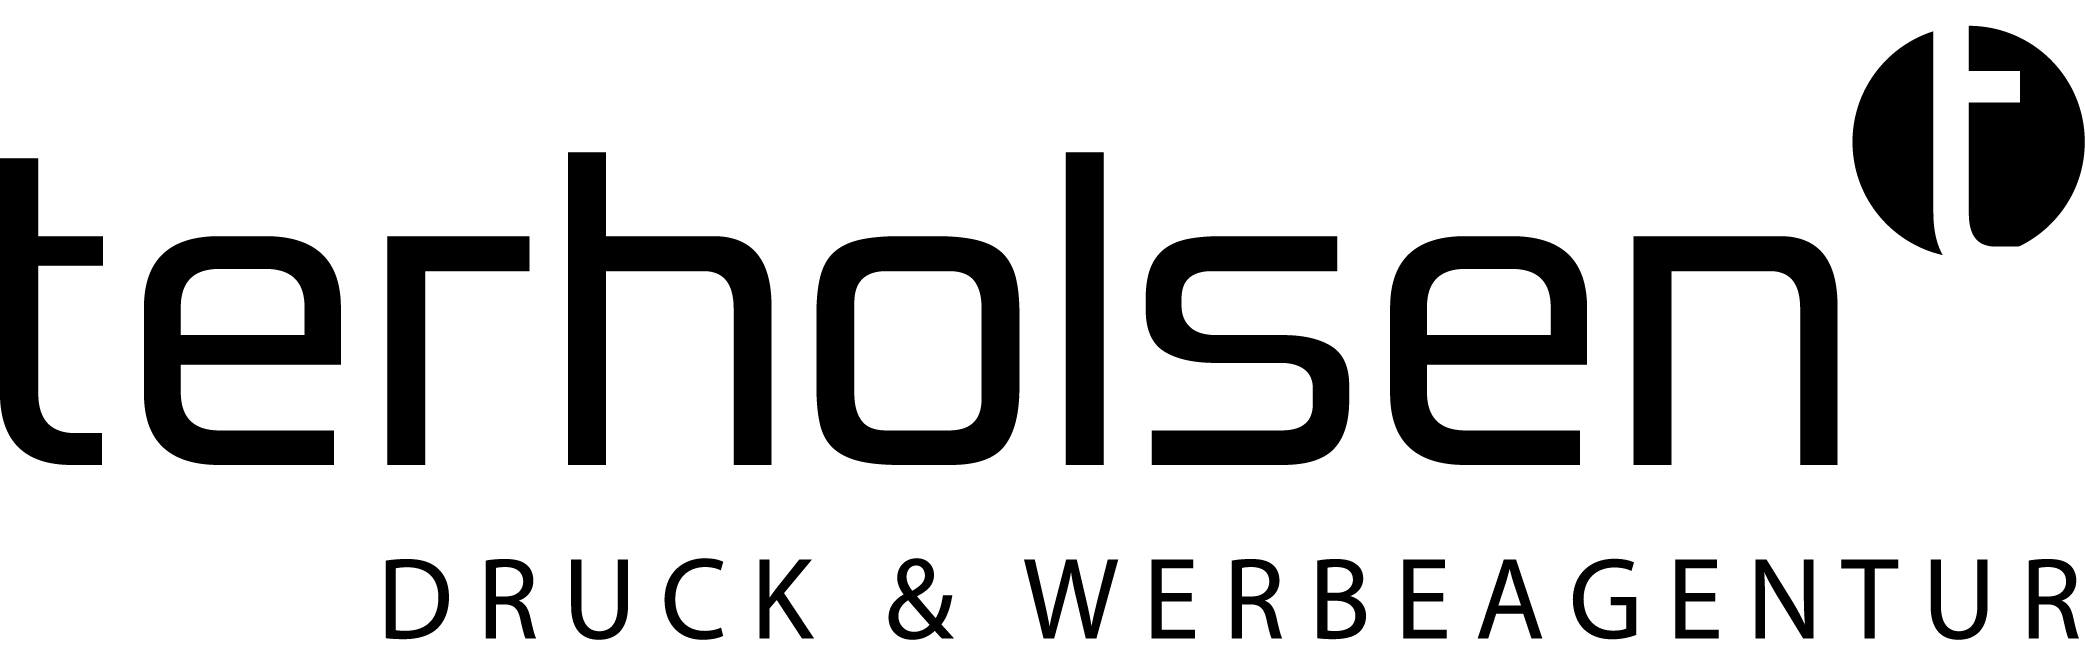 Werbeagentur Terholsen Logo